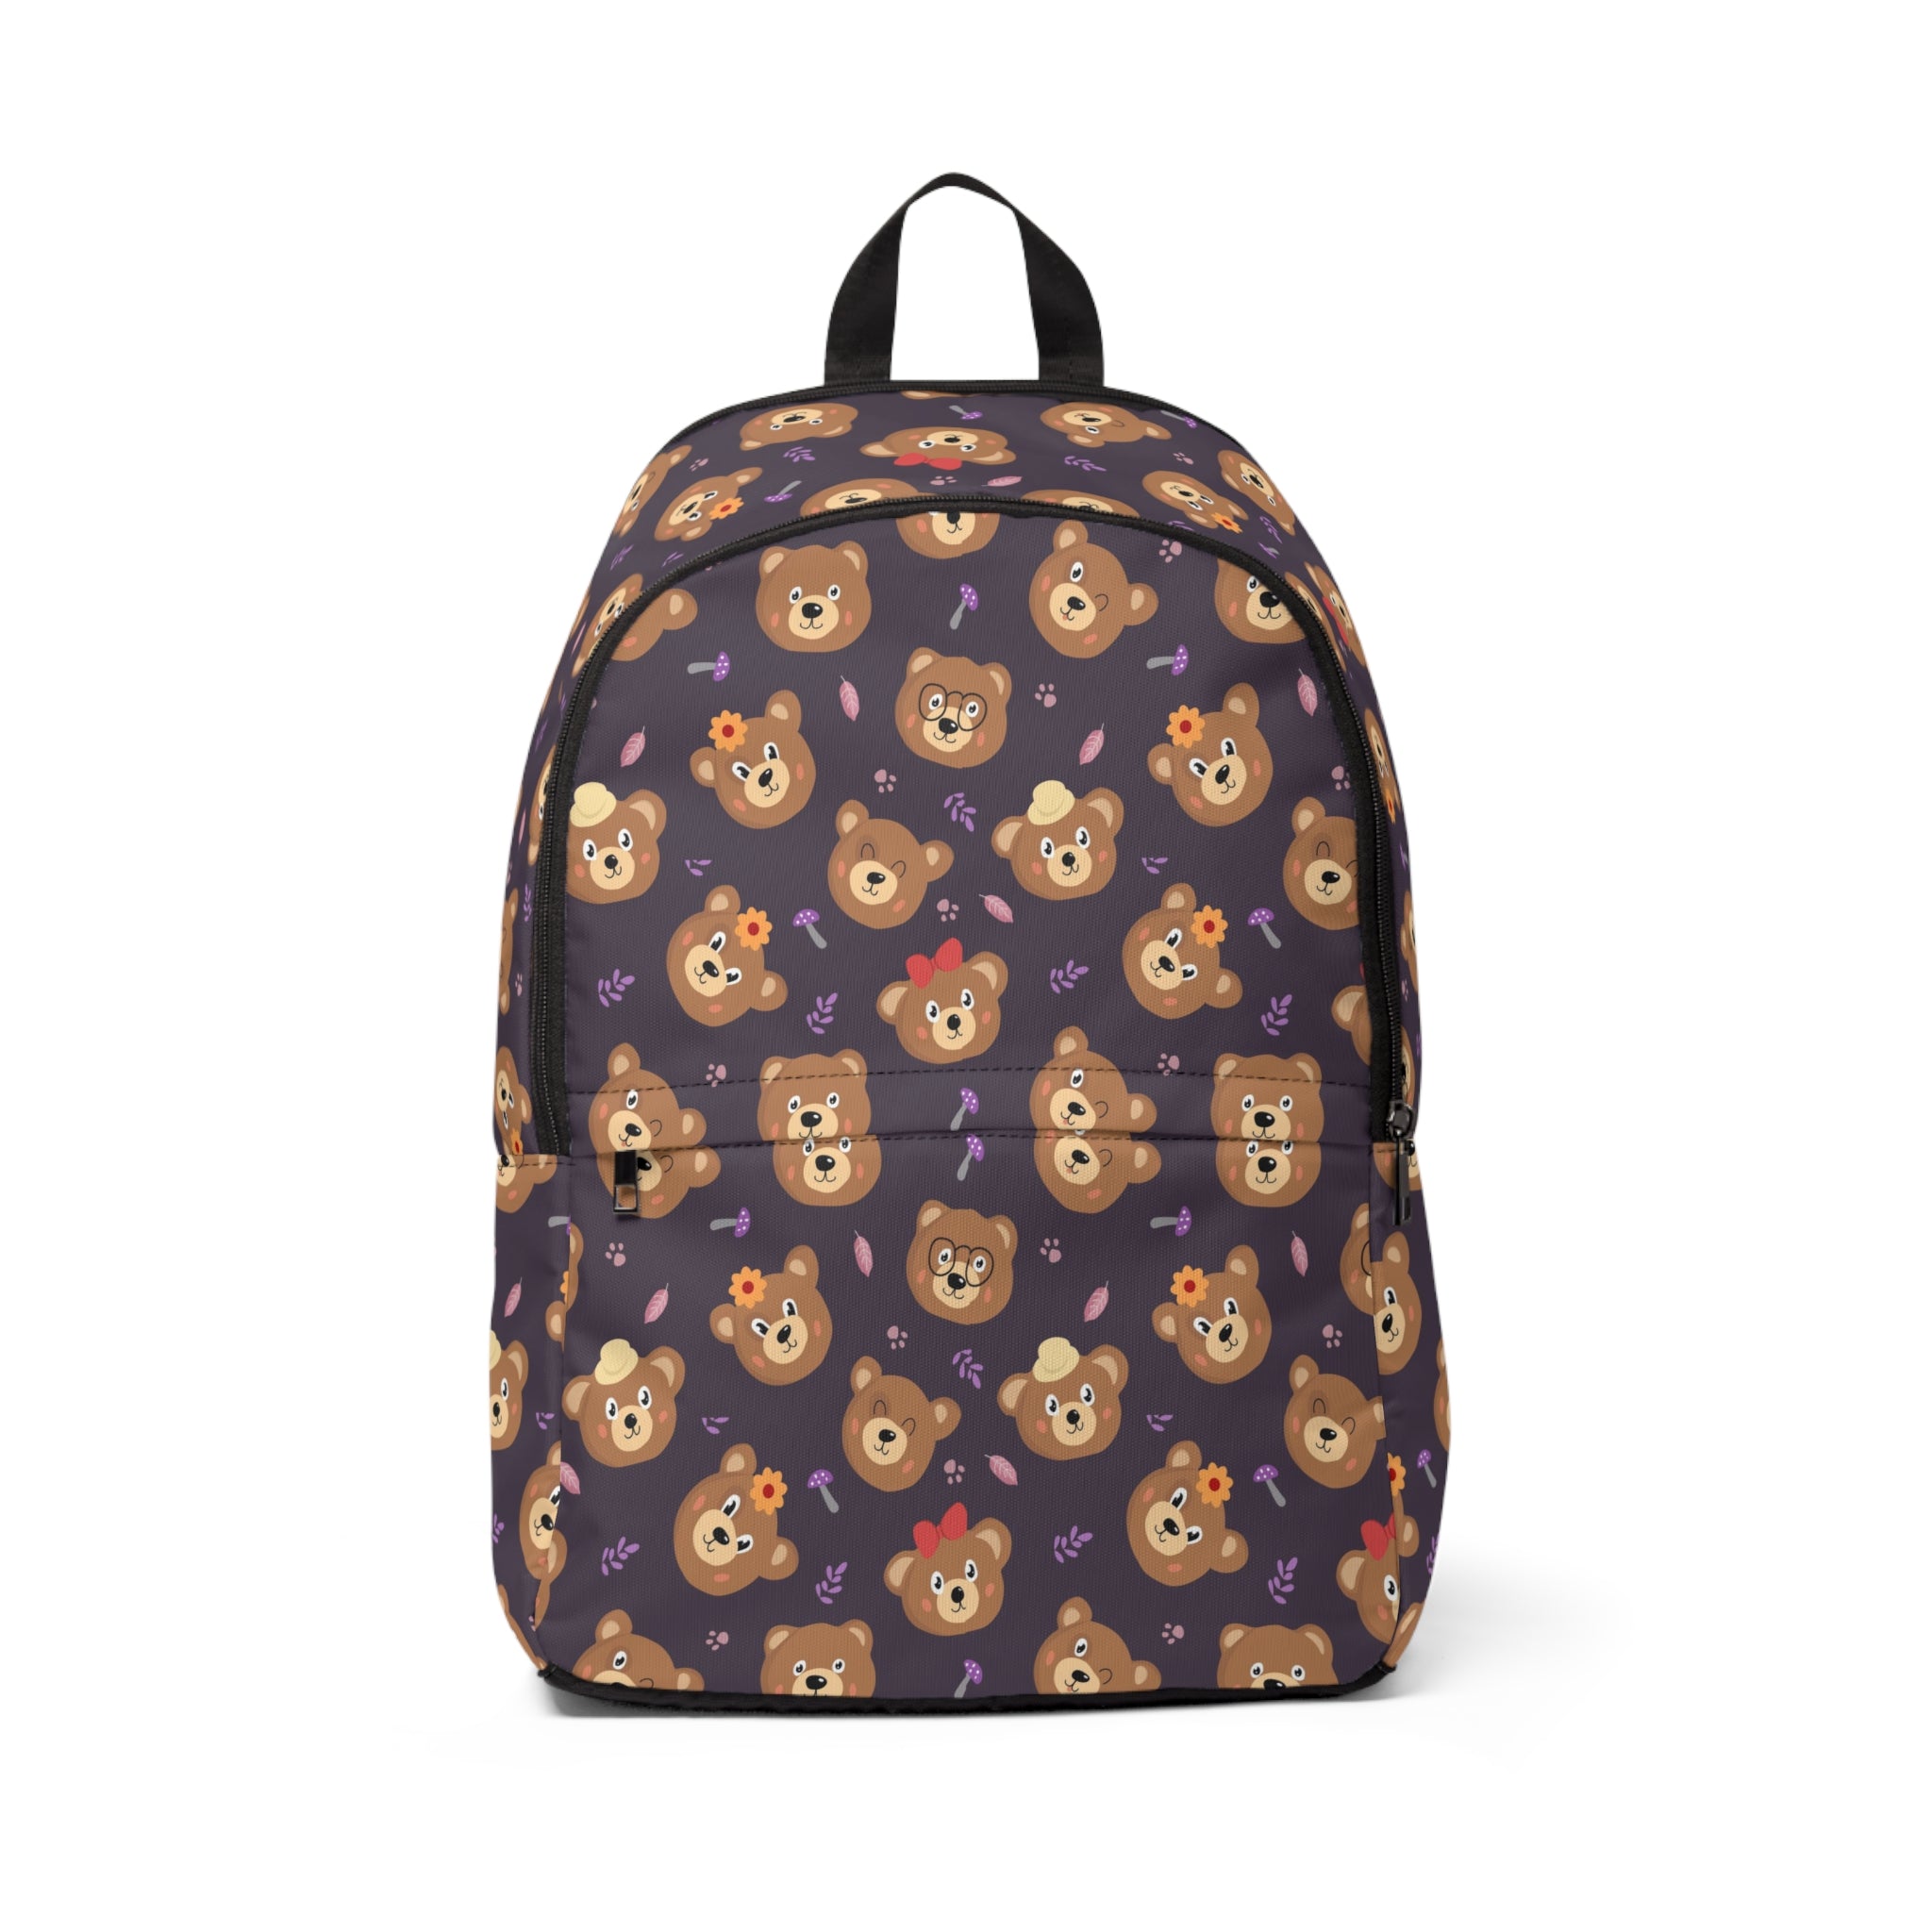 Unisex Fabric Backpack with Teddy Bear design